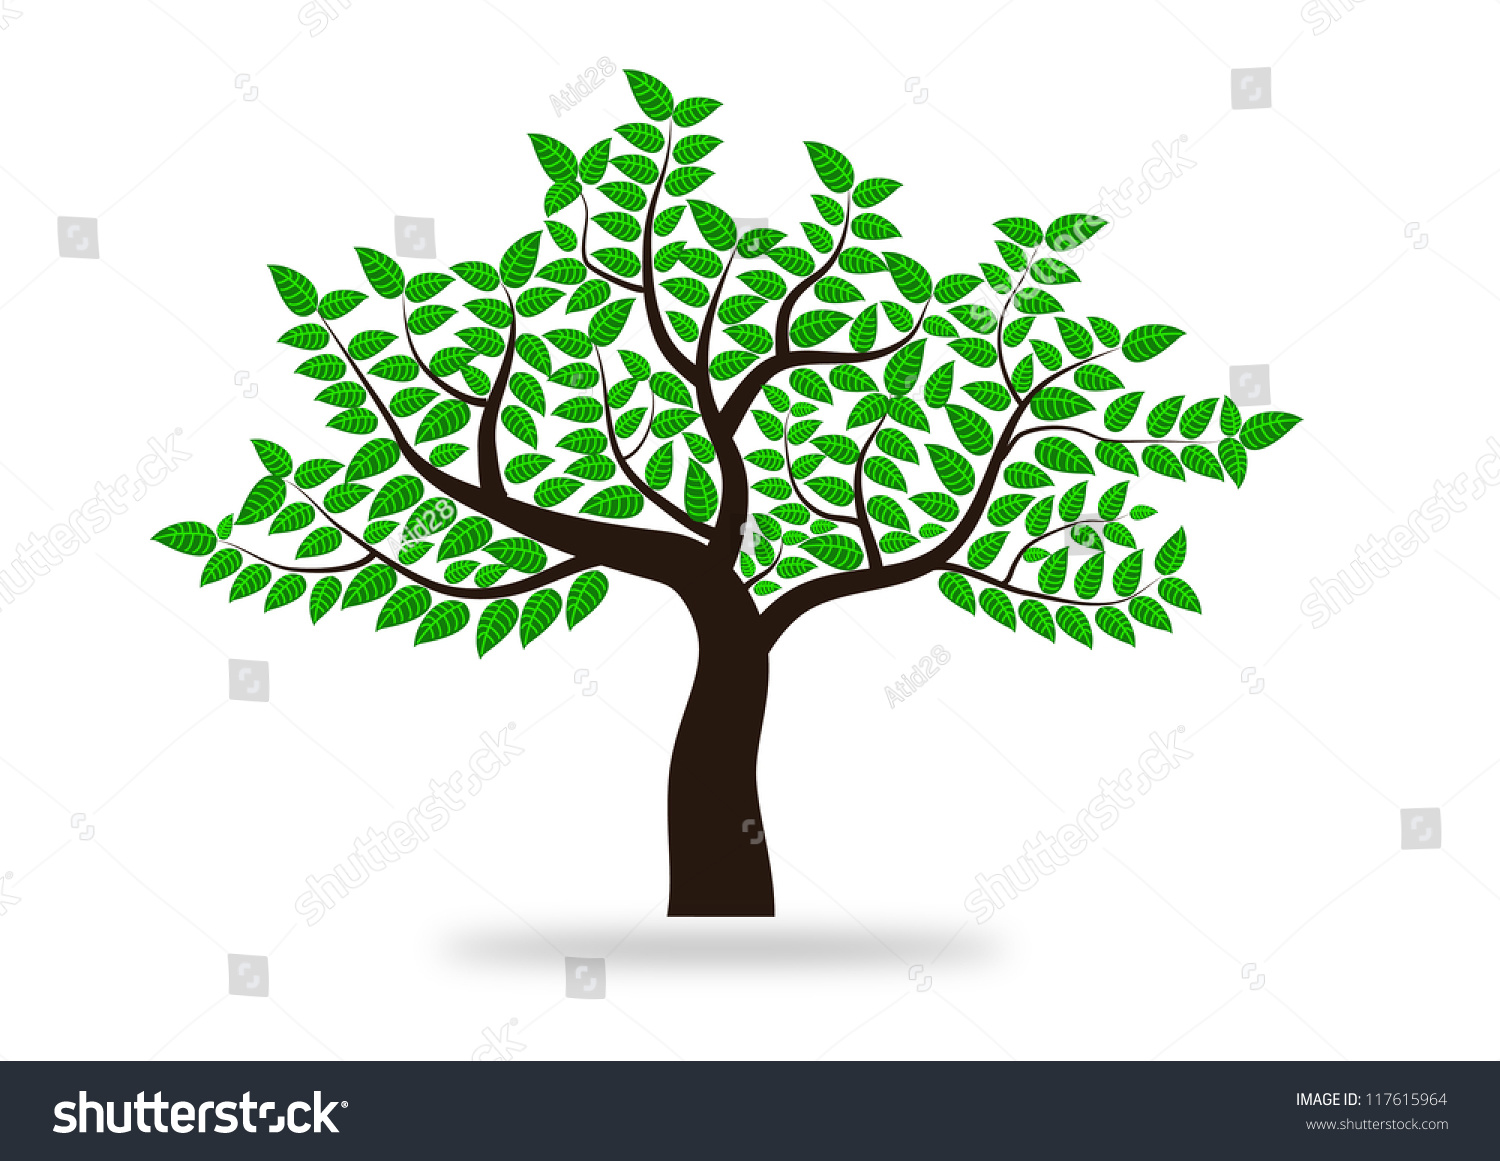 Tree Green Leafage Vector Stock Vector 117615964 - Shutterstock